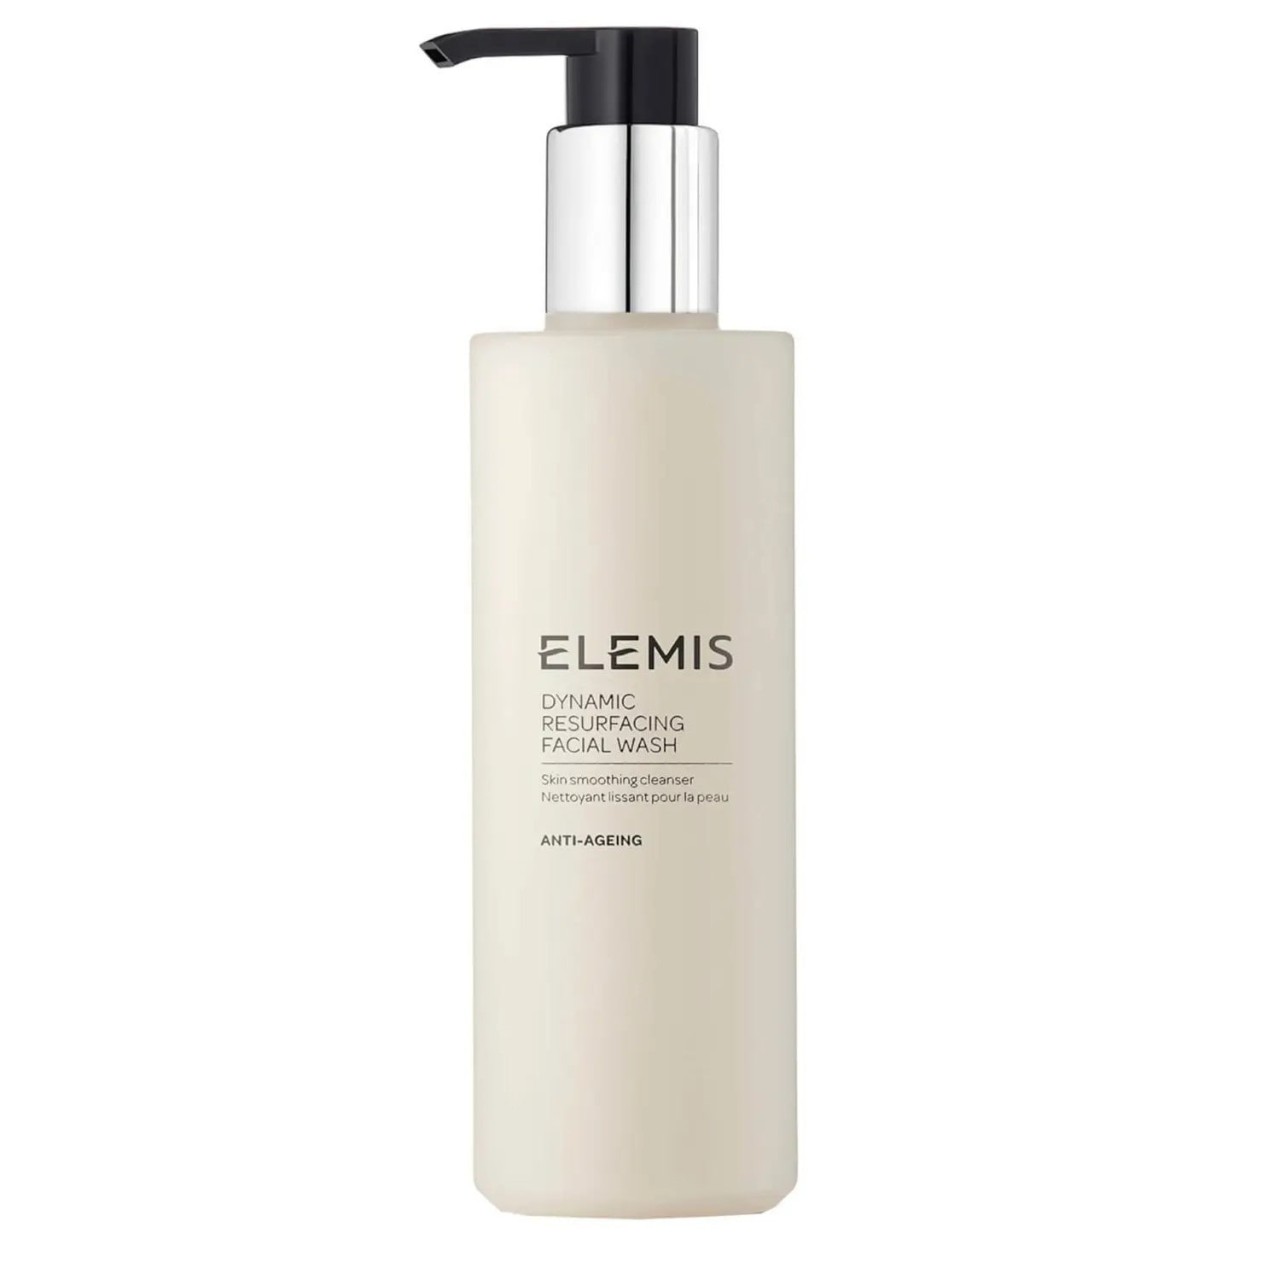 ELEMIS - Facial Wash -  200ml